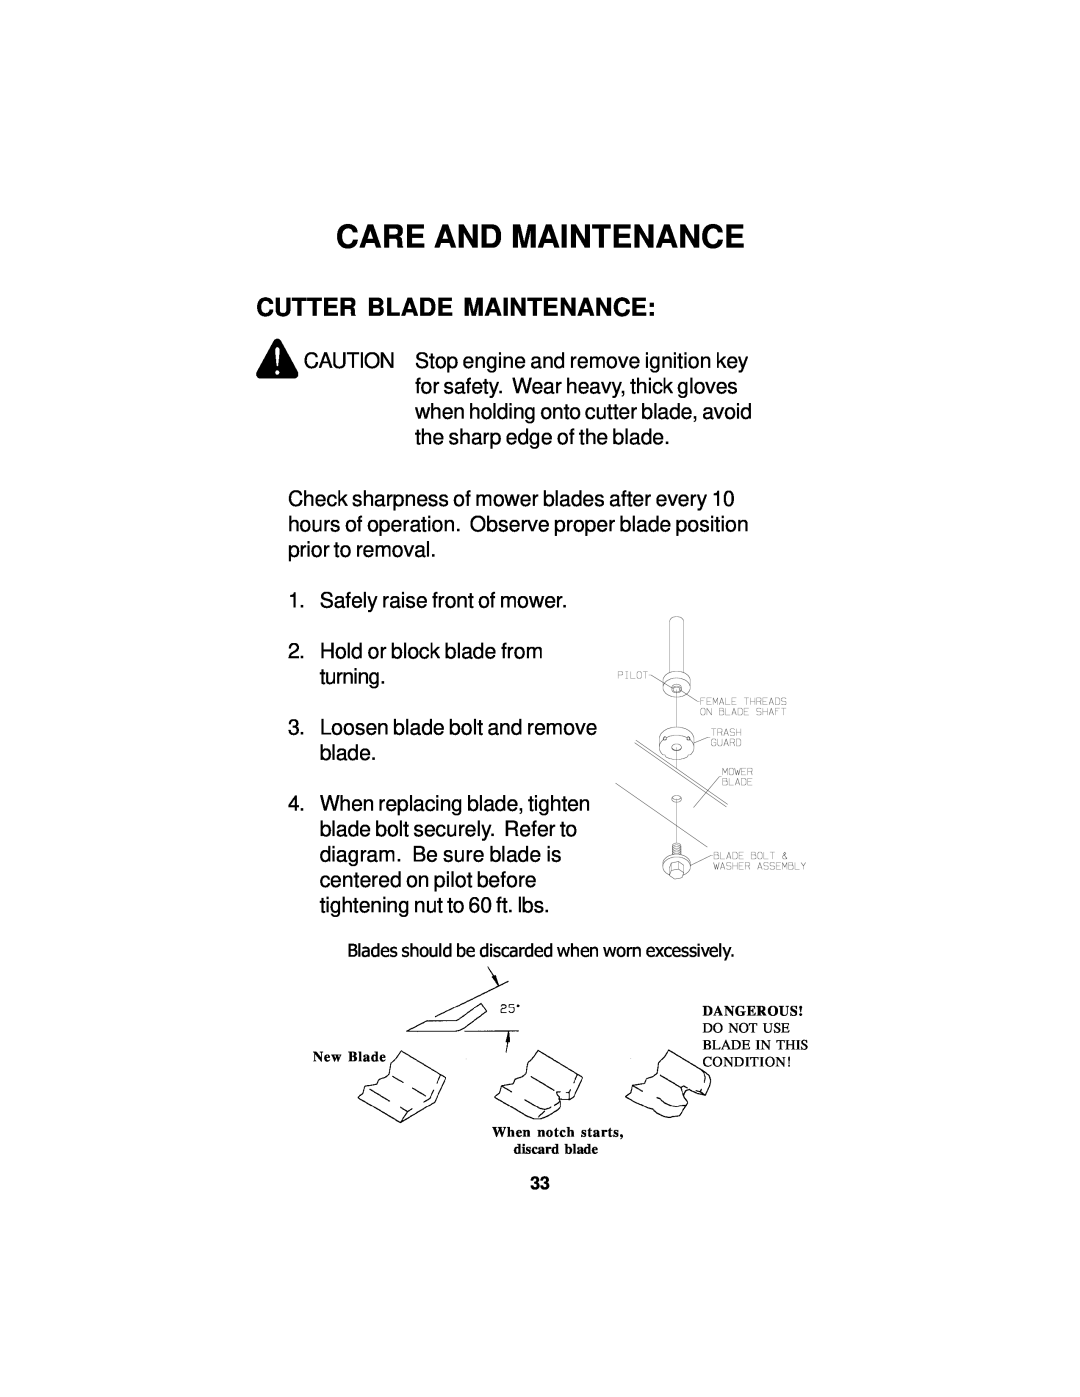 Dixon 14295-0804 manual Cutter Blade Maintenance, Care And Maintenance 